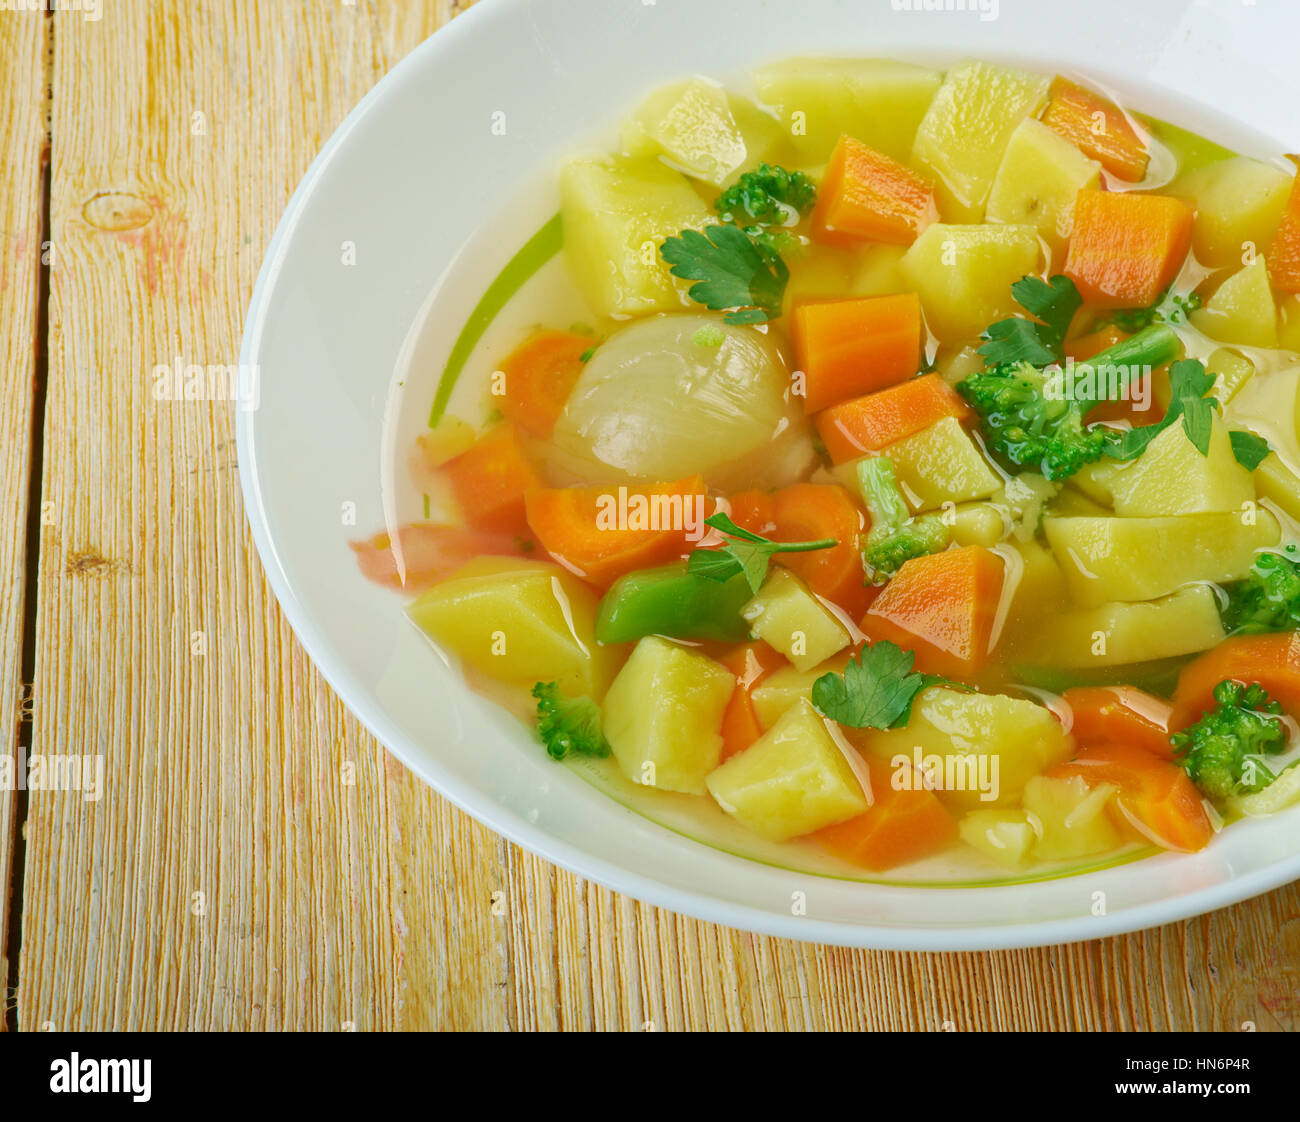 Traditionelle finnische Gemüse Suppe - Sommer Suppe Lohikeitto Stockfoto